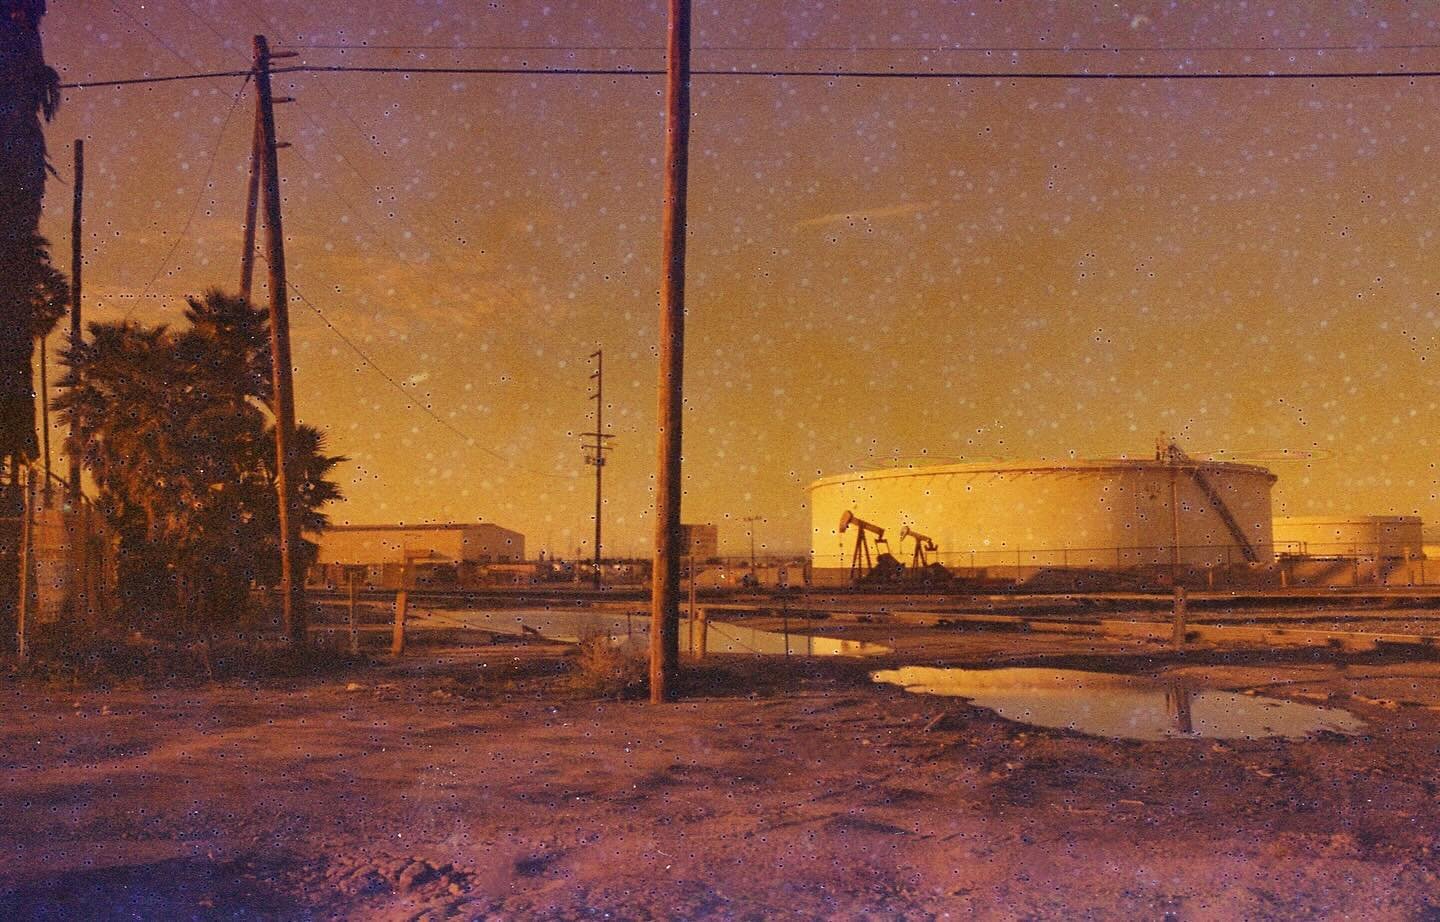 2024.03 // Los Angeles, USA
.
.
.
.
.
#film #filmphotography #analog #analogphotography #analogpeople #analogvibes #minolta #minoltagang #35mm #35mmphotography #latergram